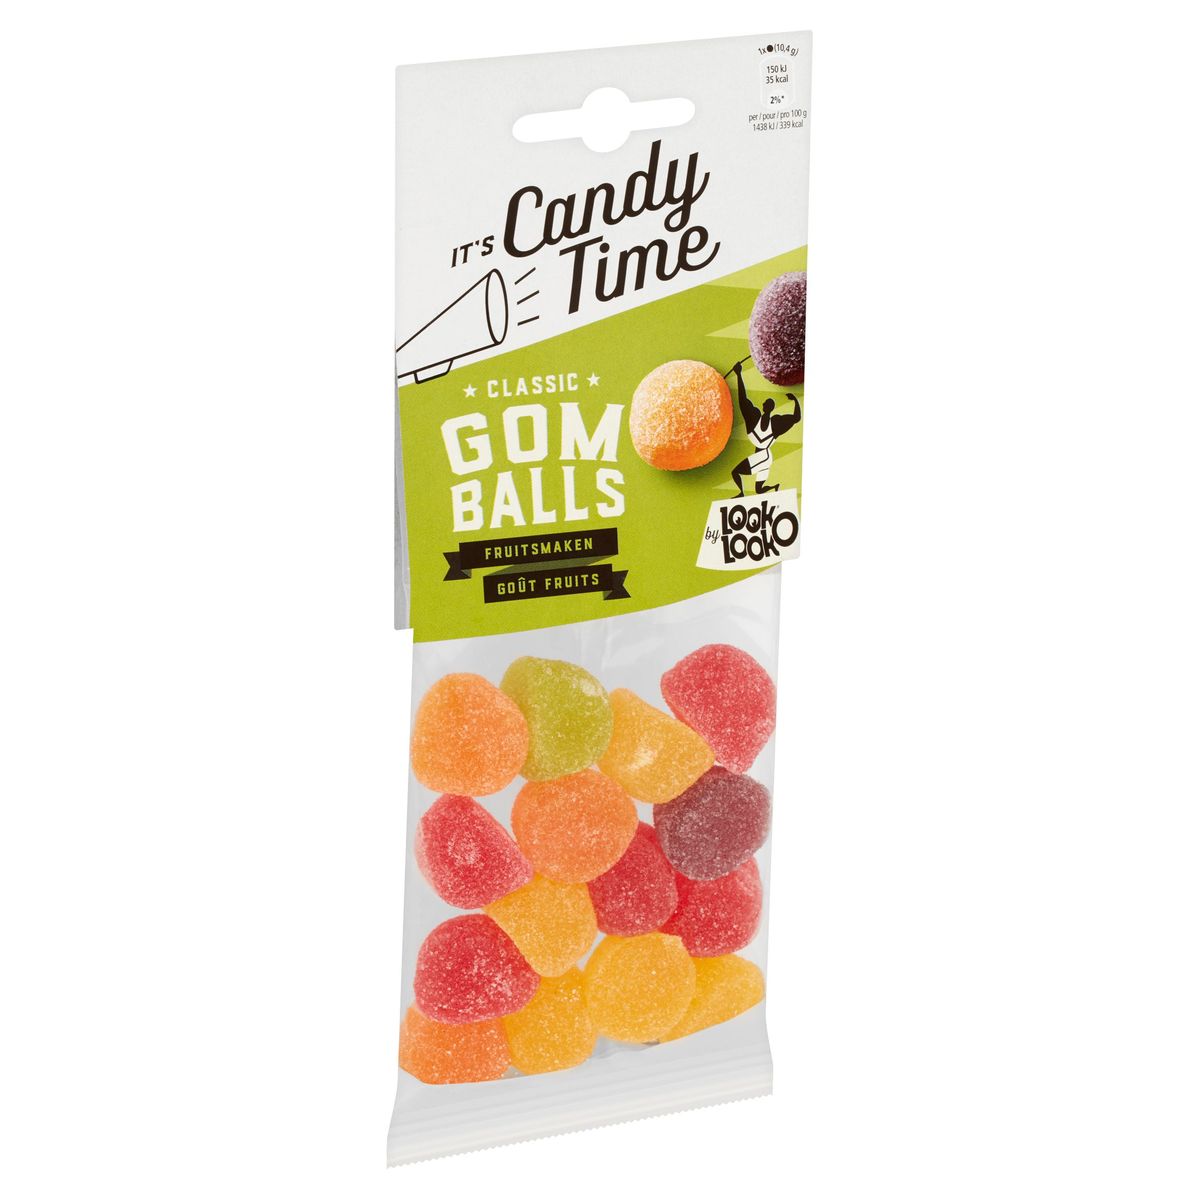 Candy Time Classic Gom Balls Goût Fruits 160 g